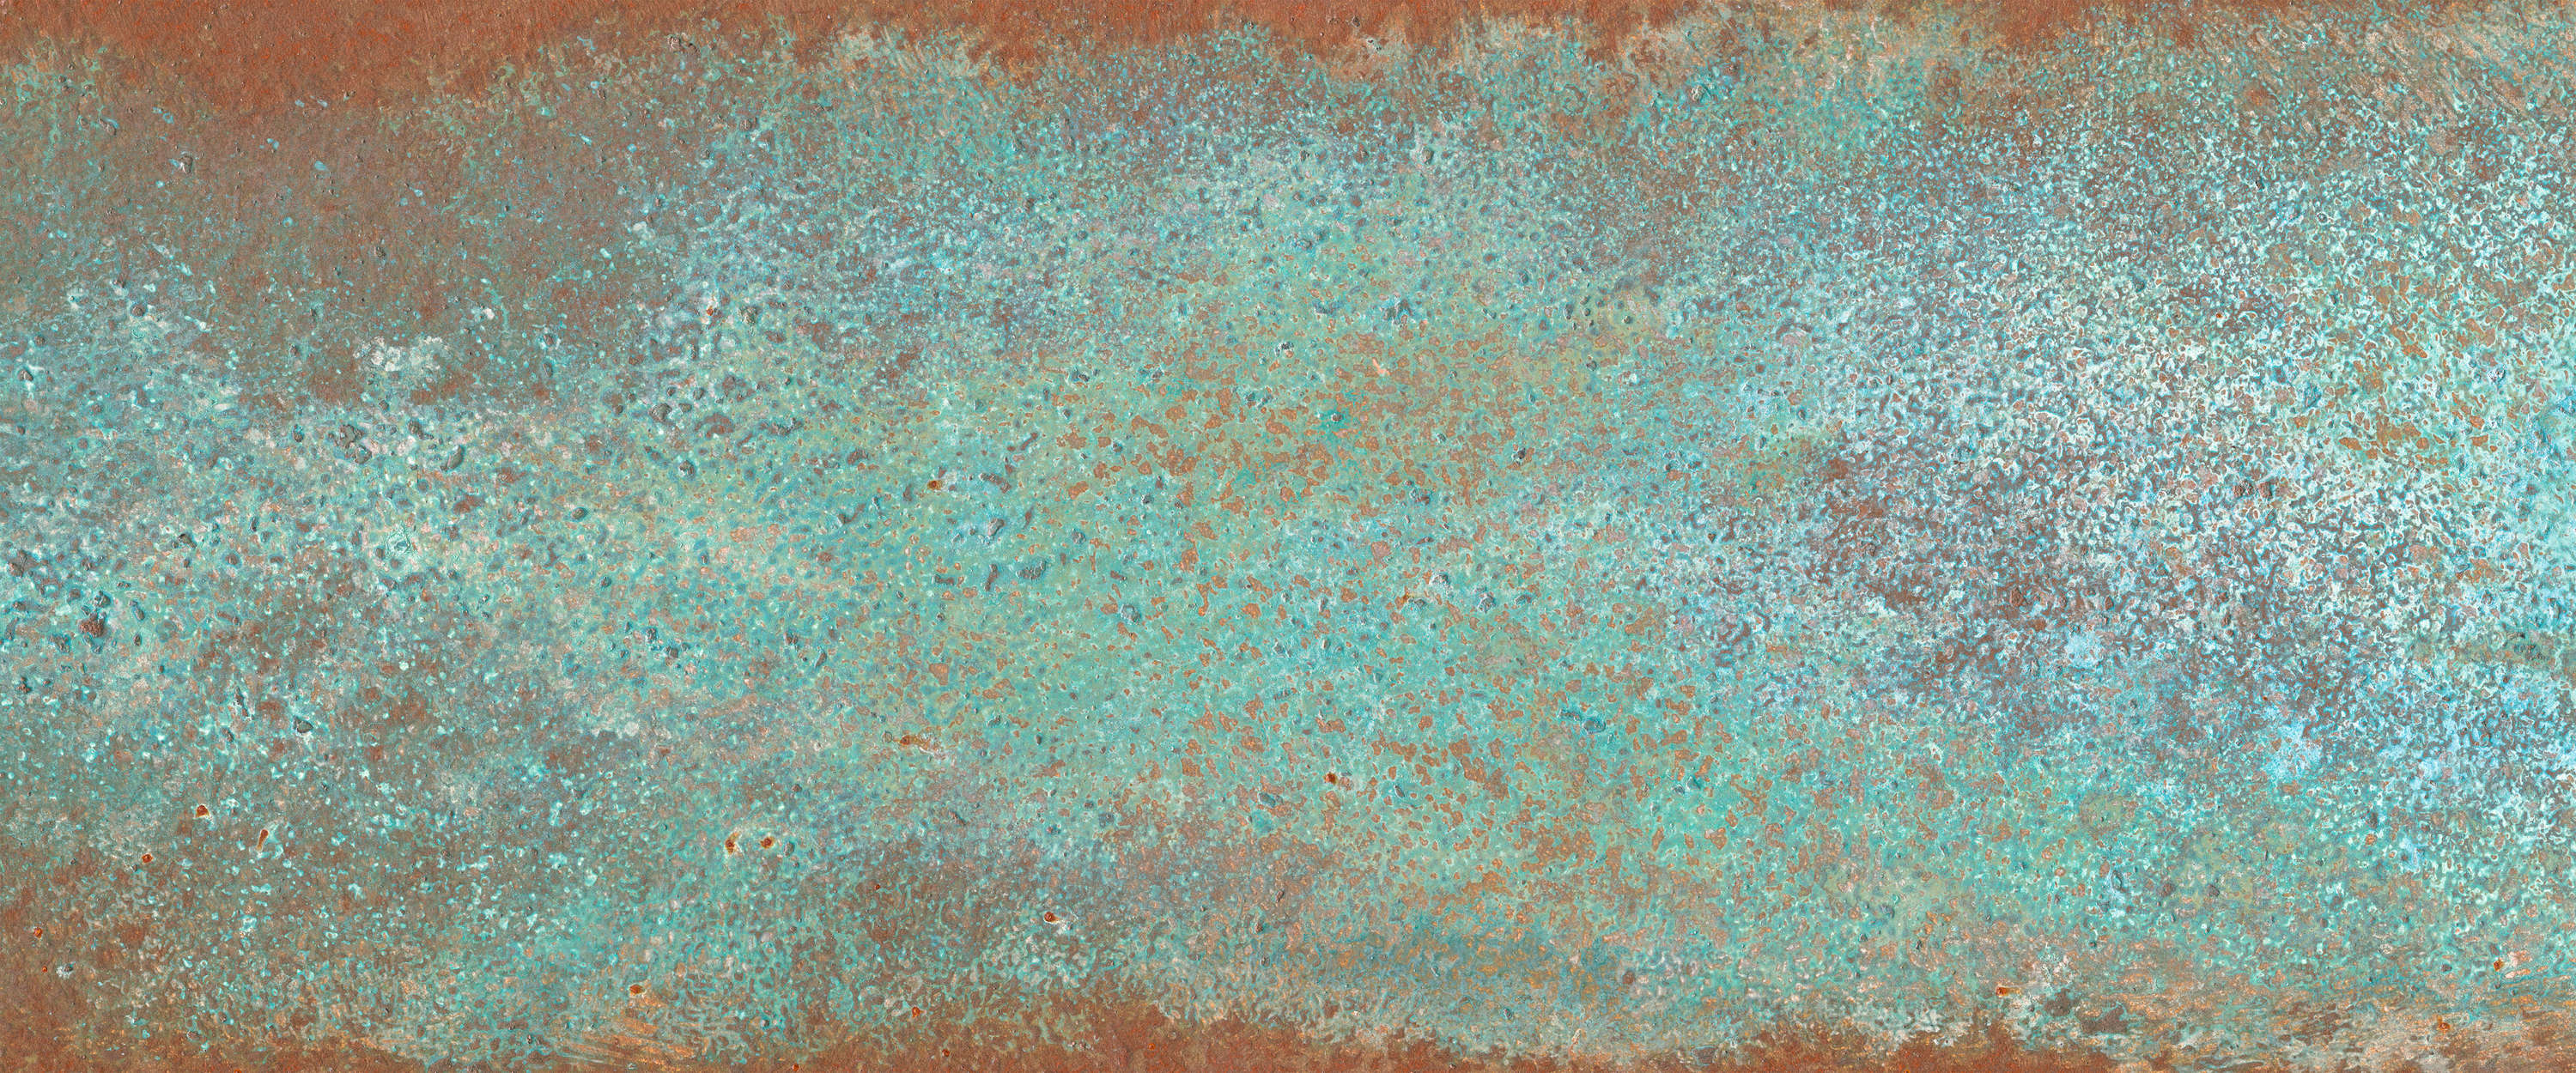             Metaaloptiek fotobehang turquoise patina met roest
        